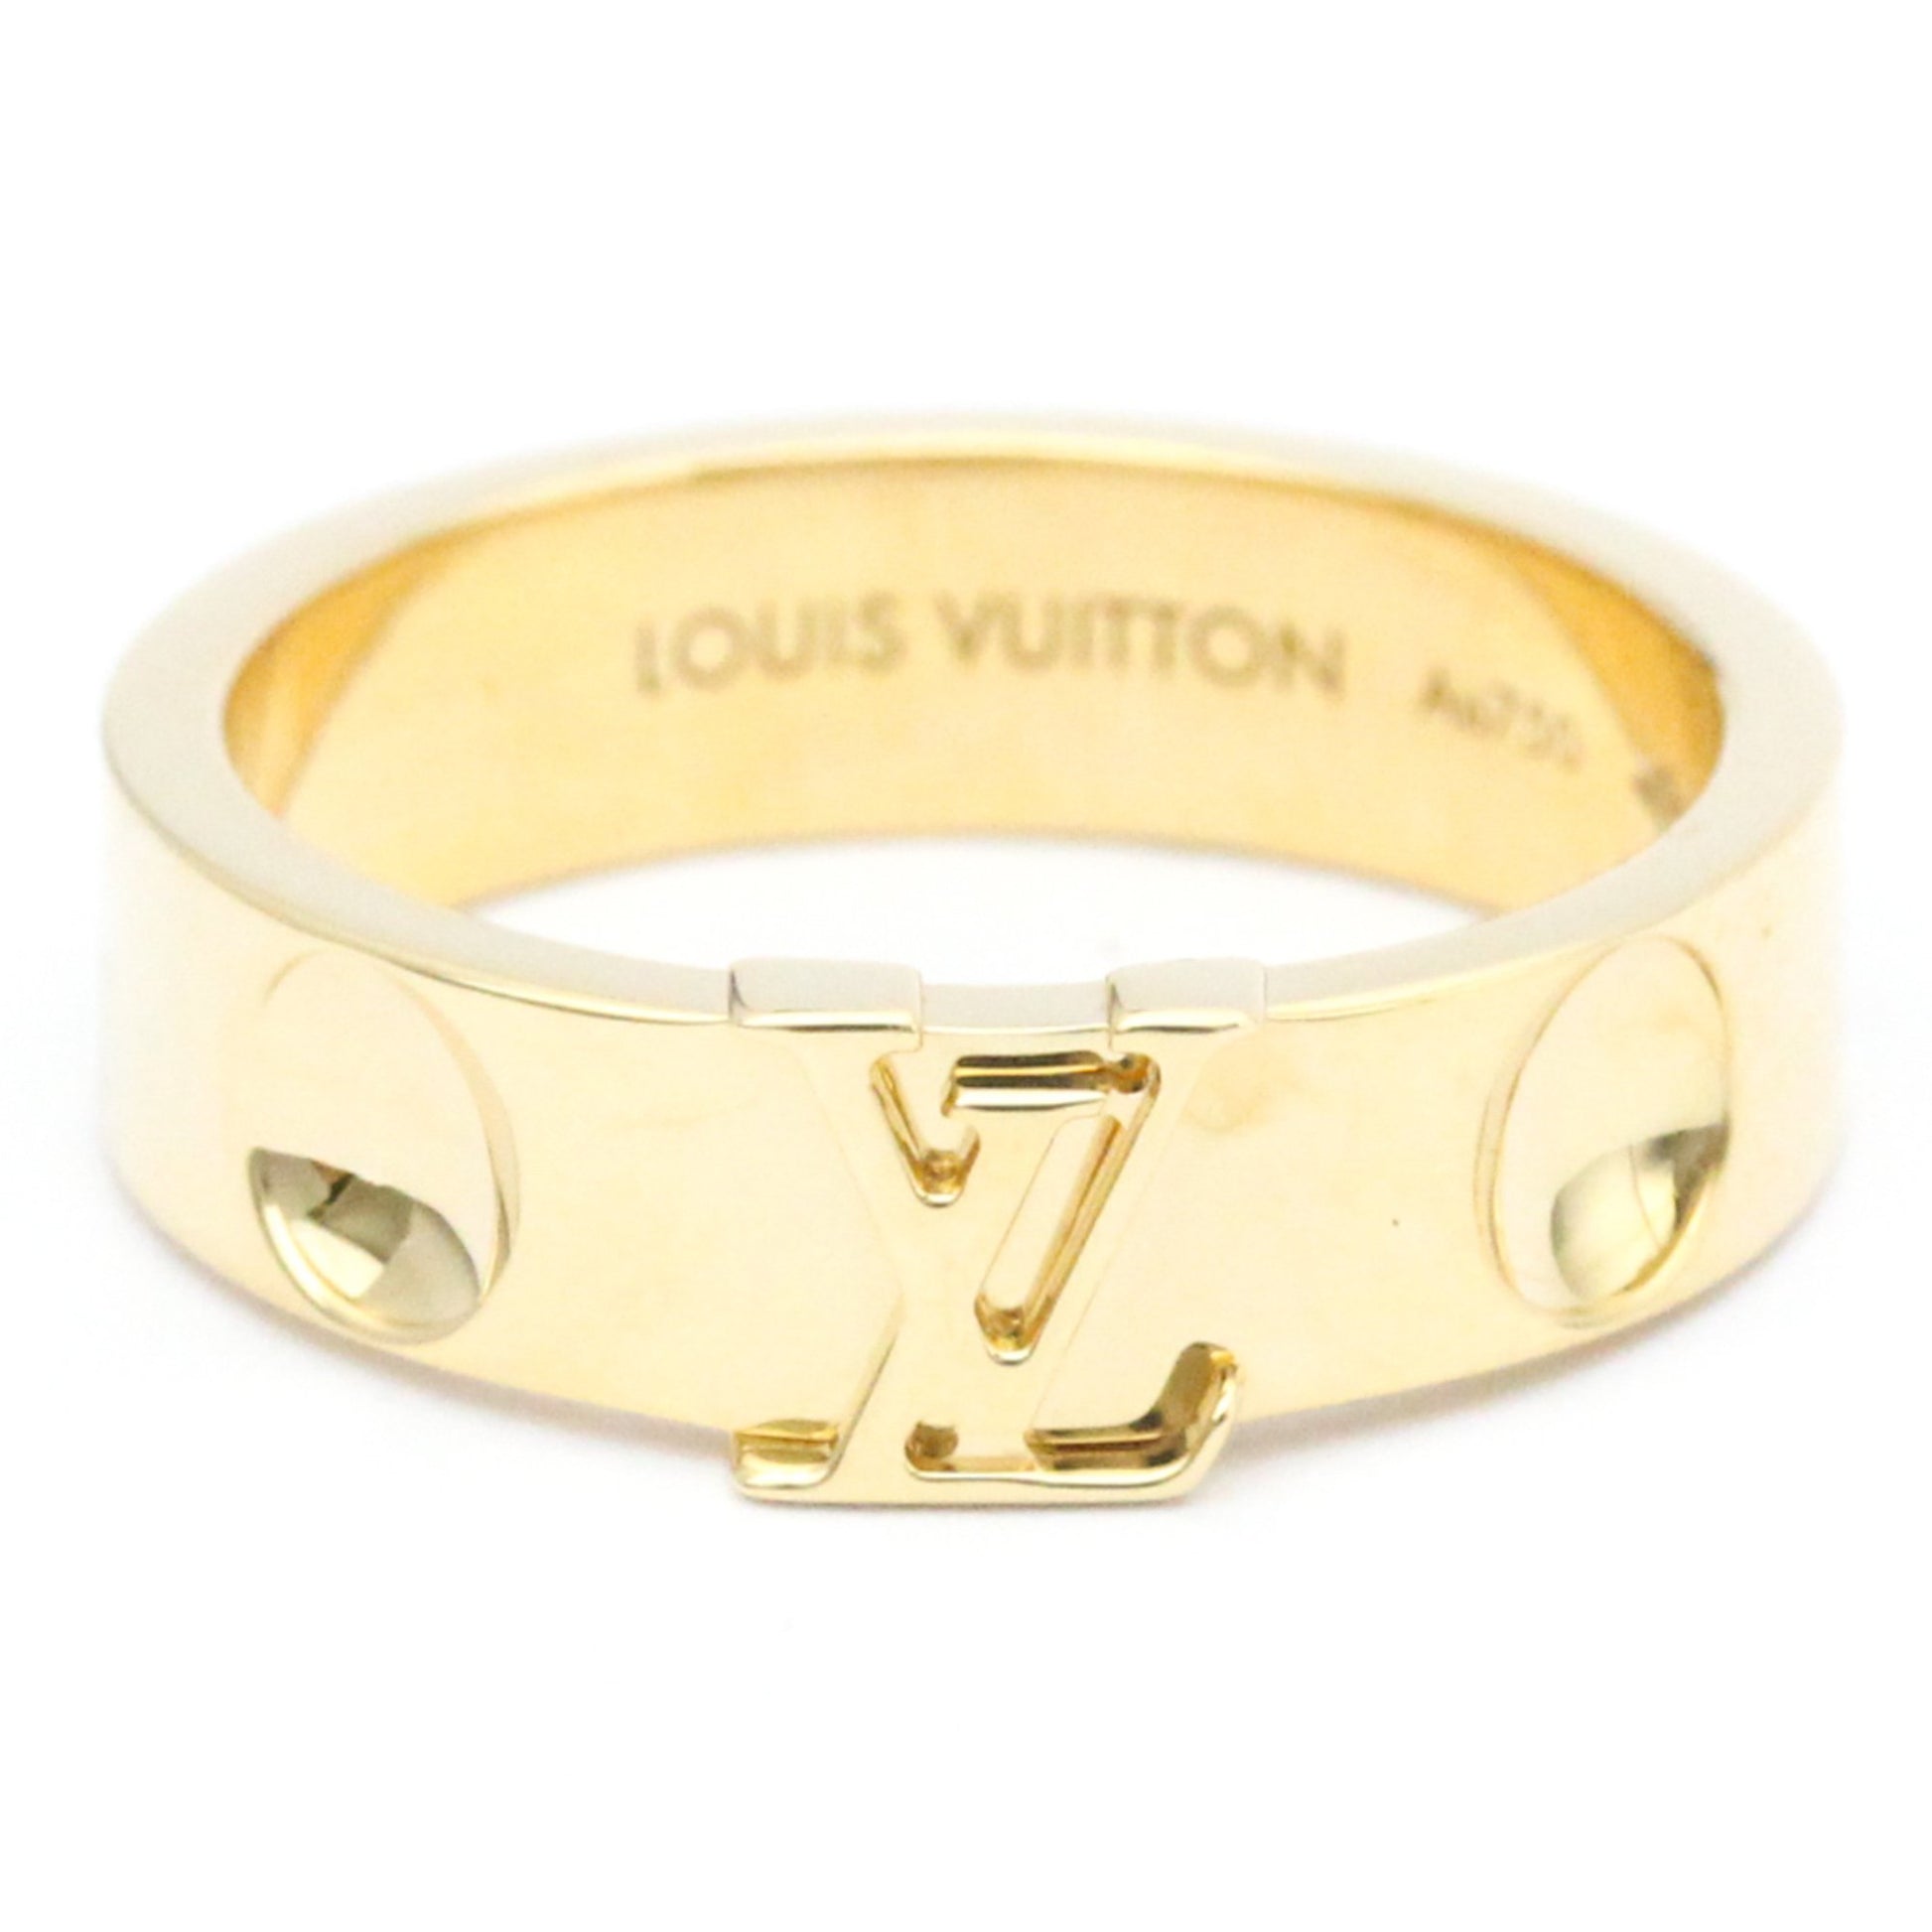 Louis Vuitton - Empreinte Bracelet Pink Gold and Diamonds - Pink Gold - Unisex - Luxury